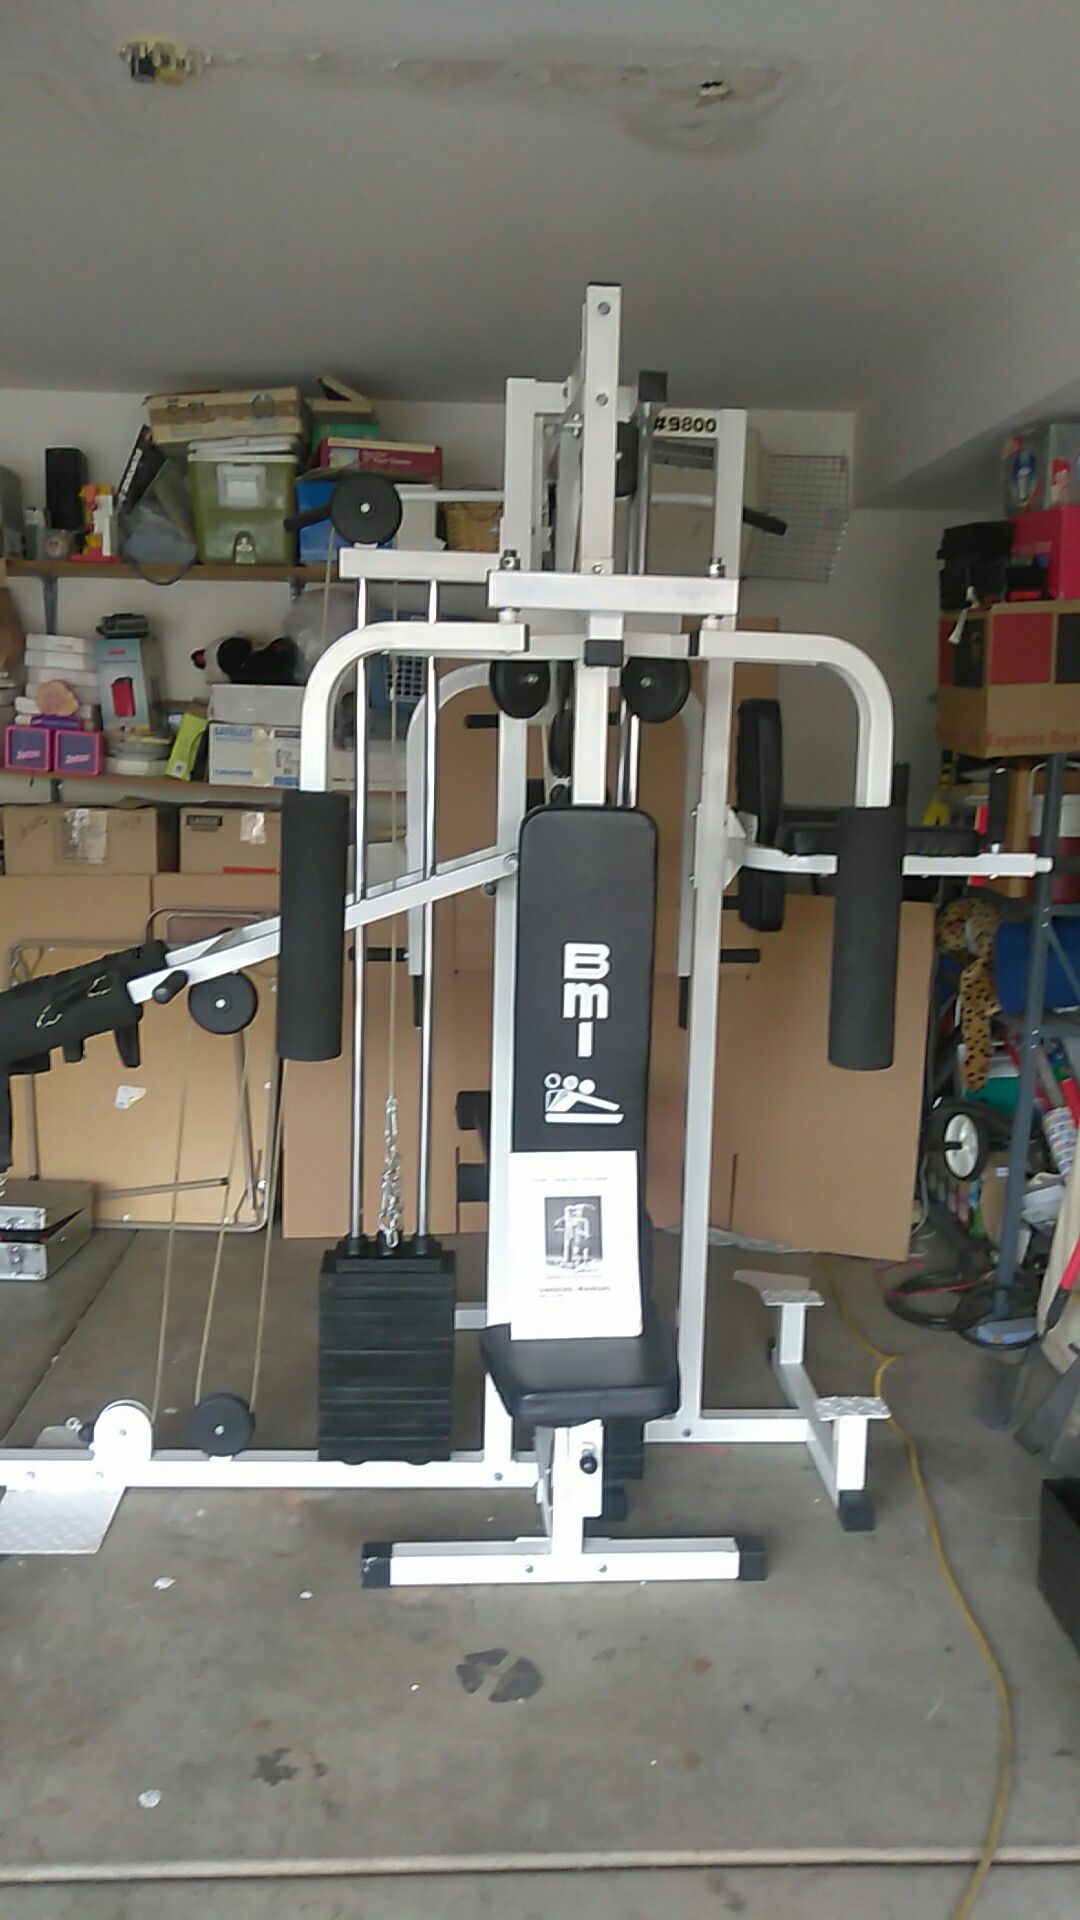 Bmi home exercise machine #9800